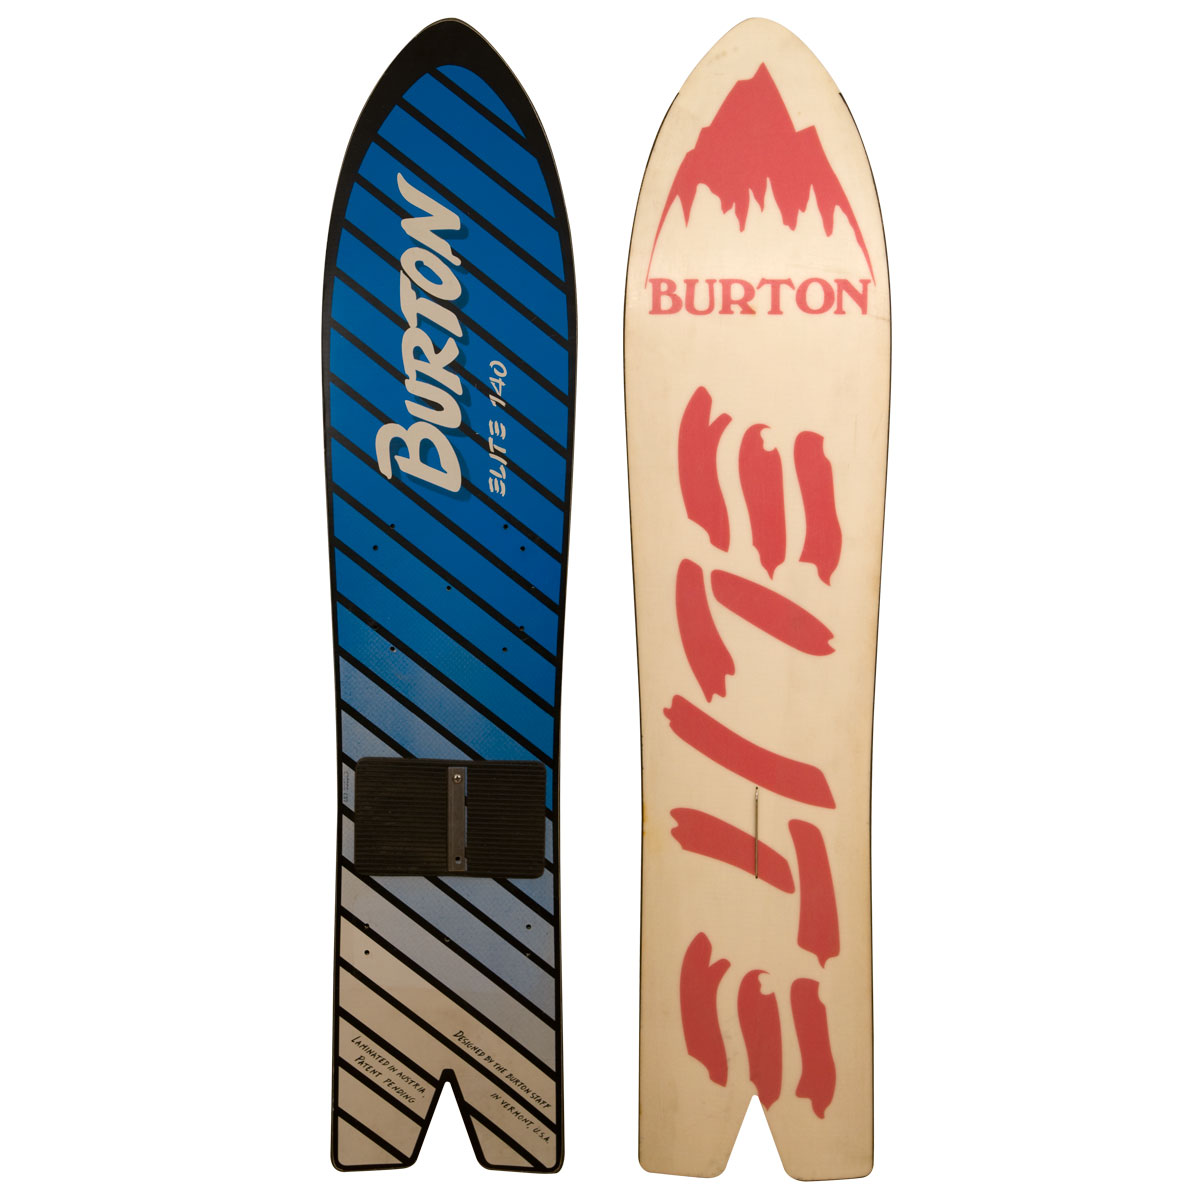 Elite Retro Snow - Vintage Snowboard